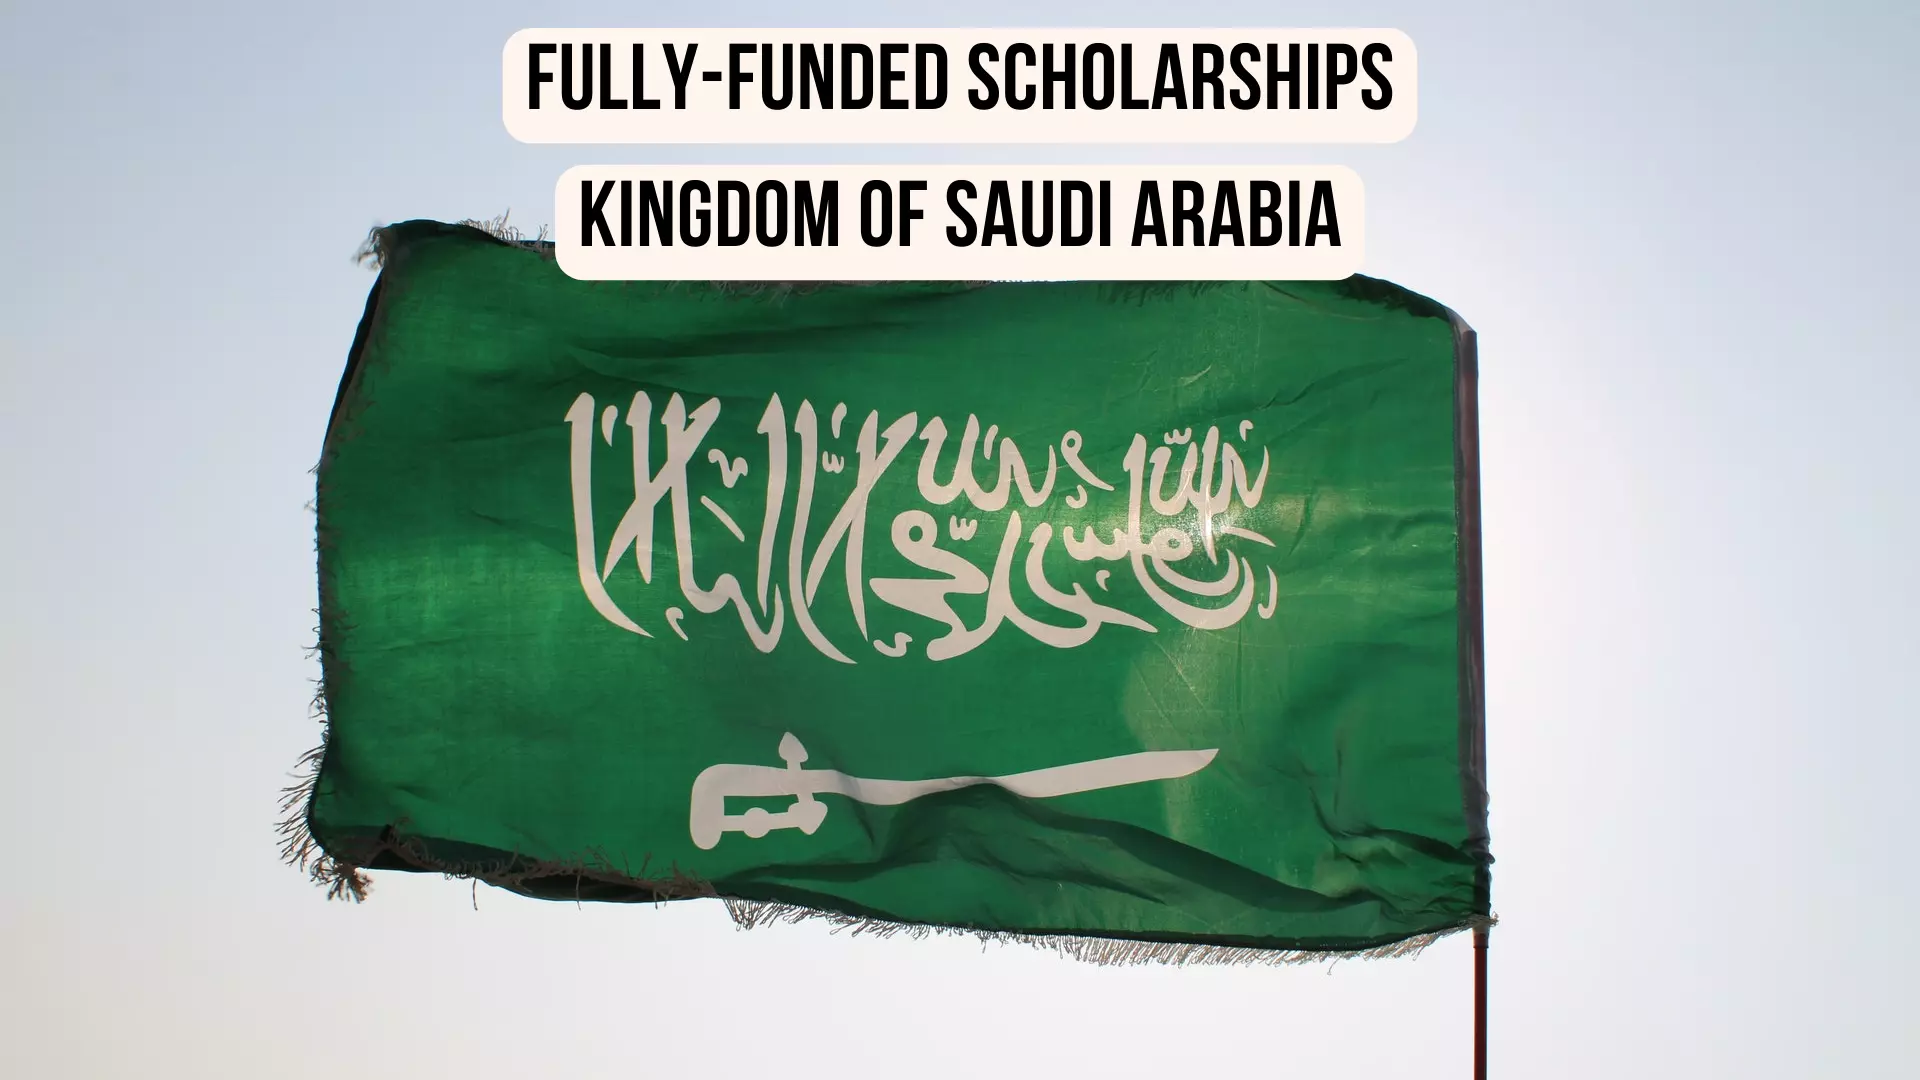 fully funded scholarships in the Kingdom of Saudi Arabia